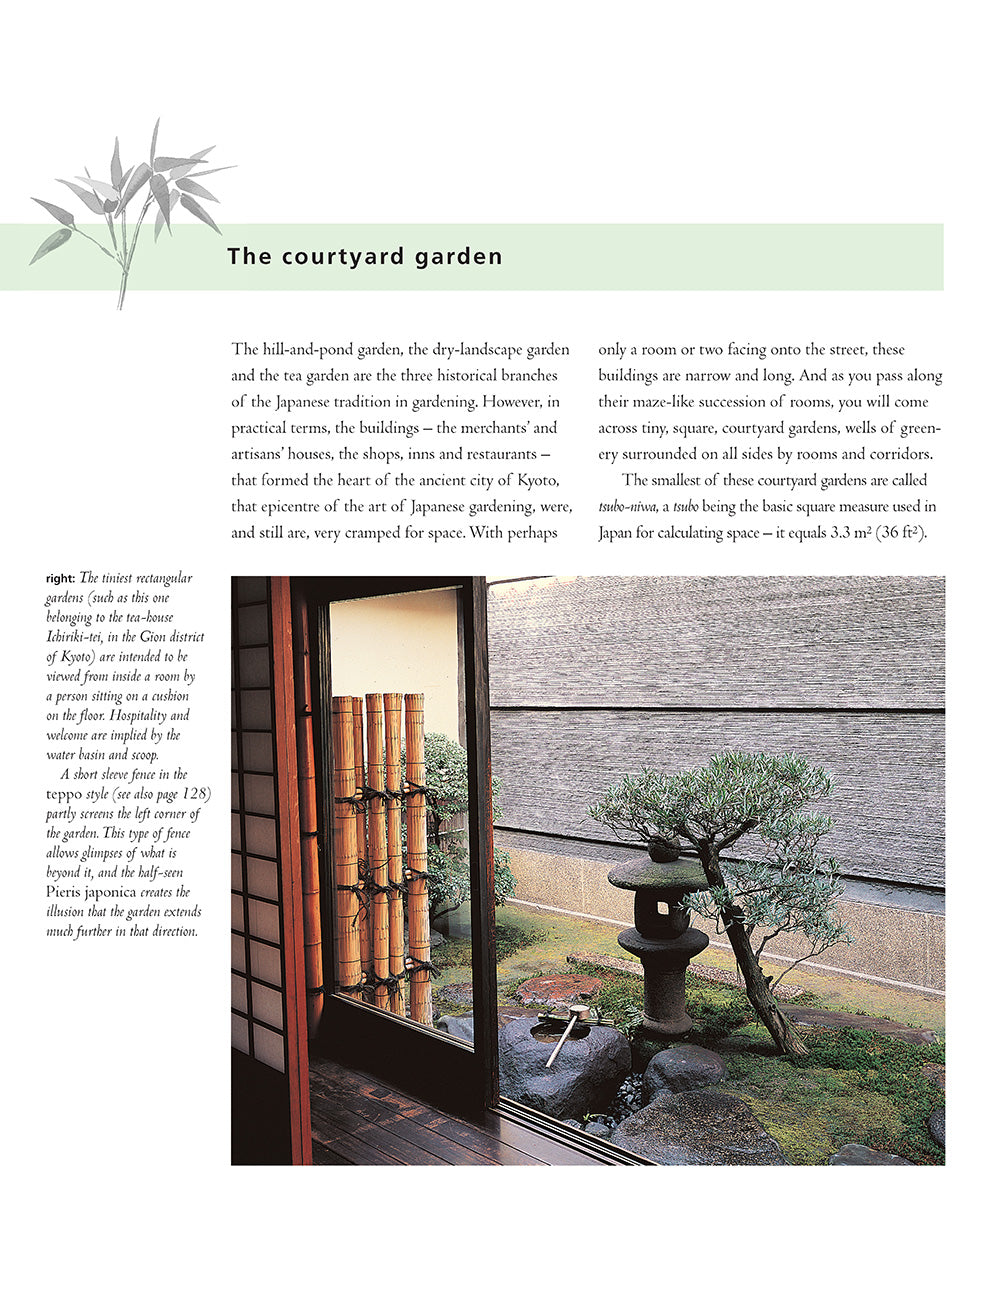 Authentic Japanese Gardens